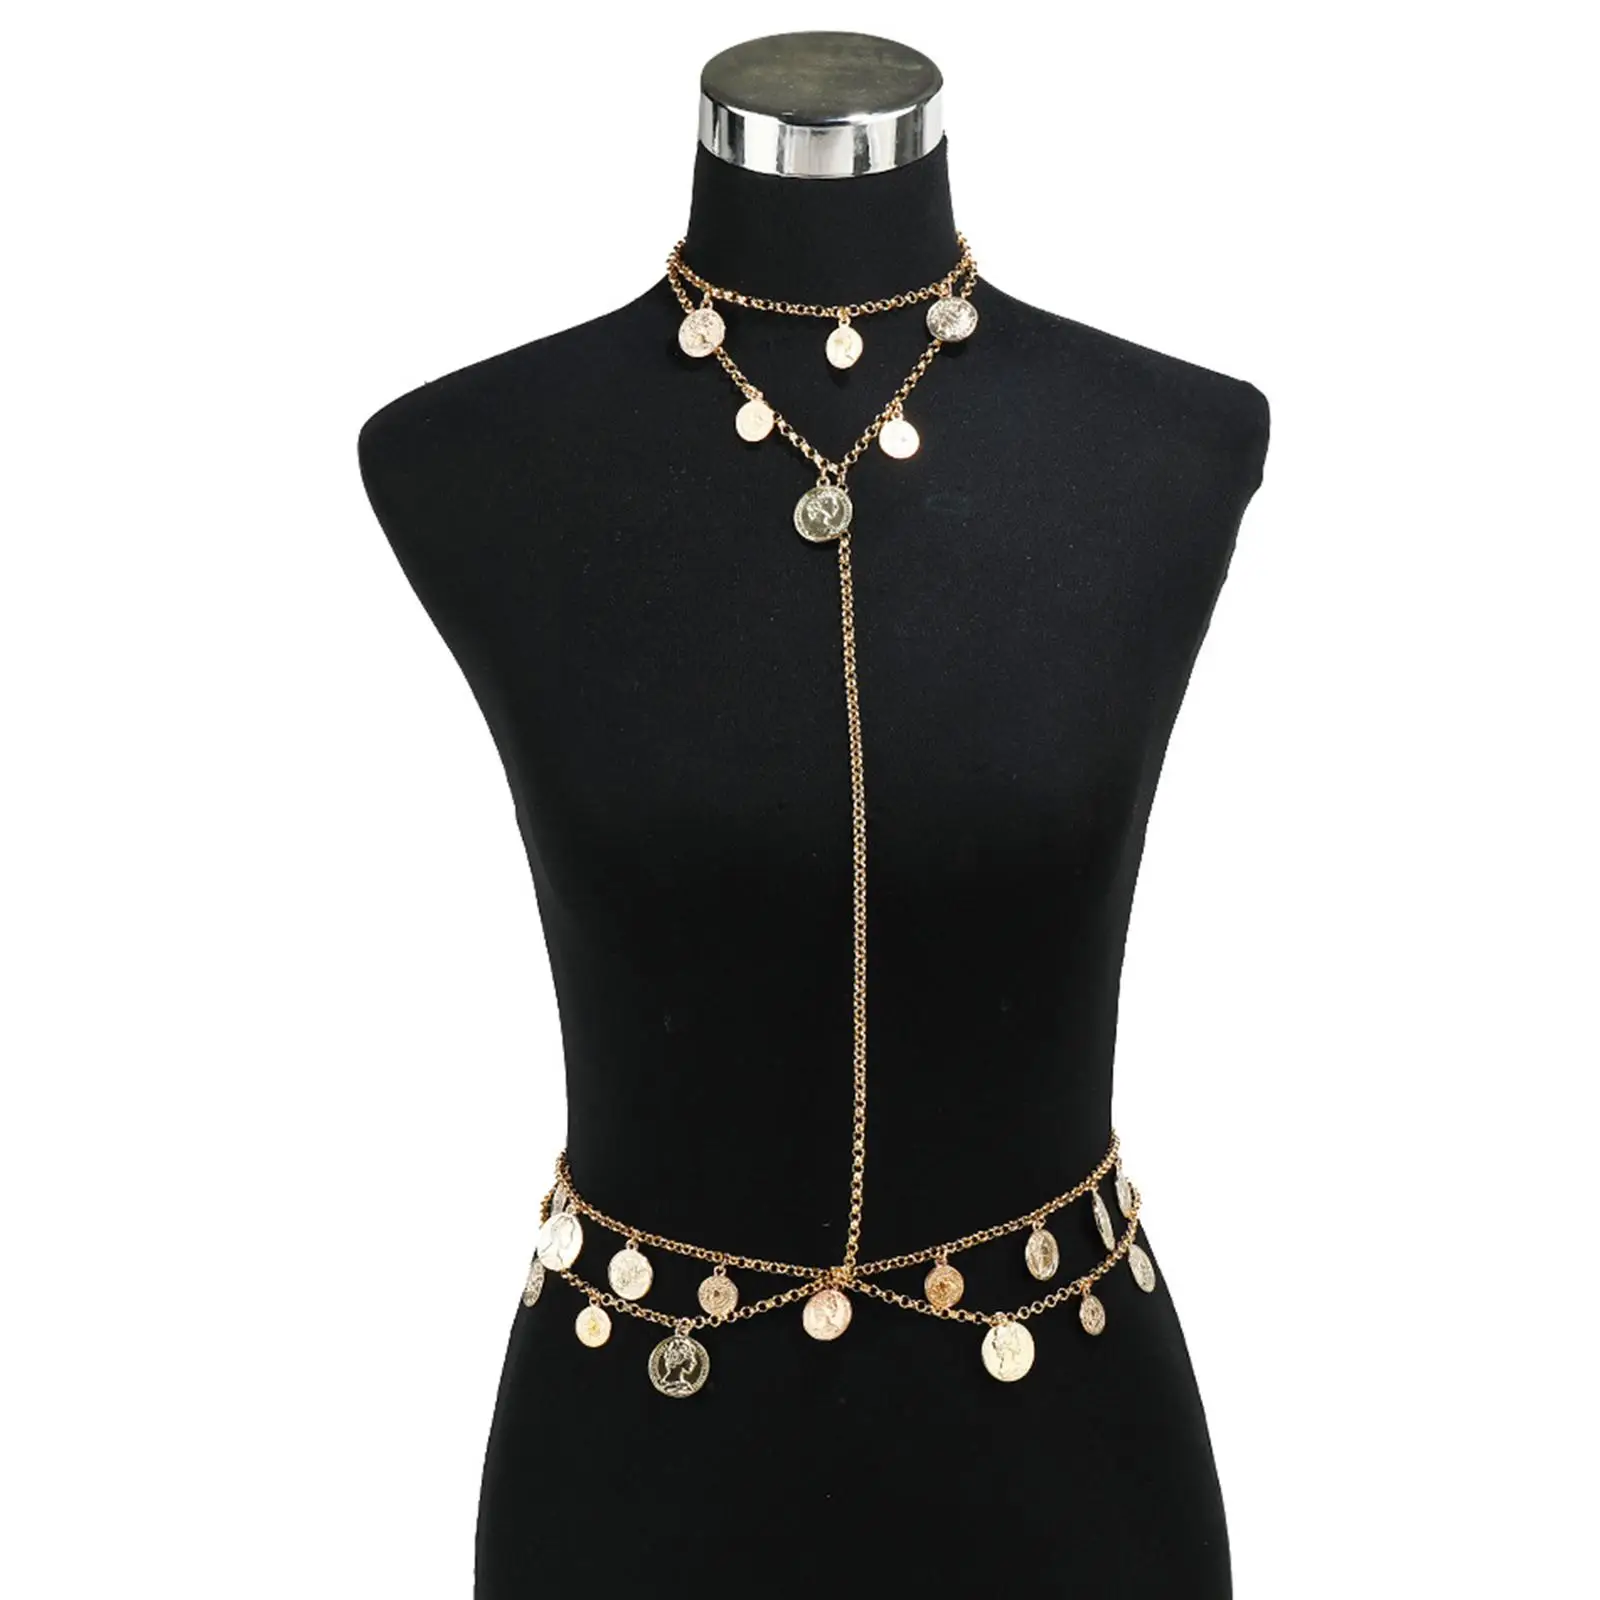 Body Chain Fashion Jewelry Alloy Multi-Level Gold Golden Coin Pendant Waist Chain Necklace for Gift Beach Nightclub Girls Women